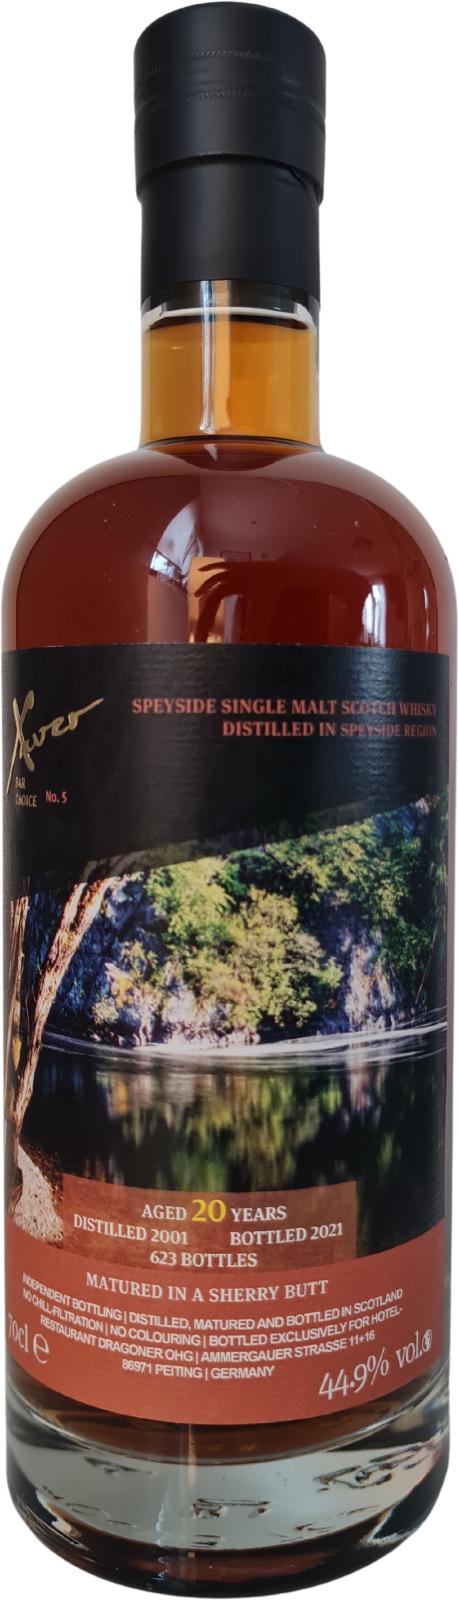 Speyside Single Malt Scotch Whisky 2001 UD